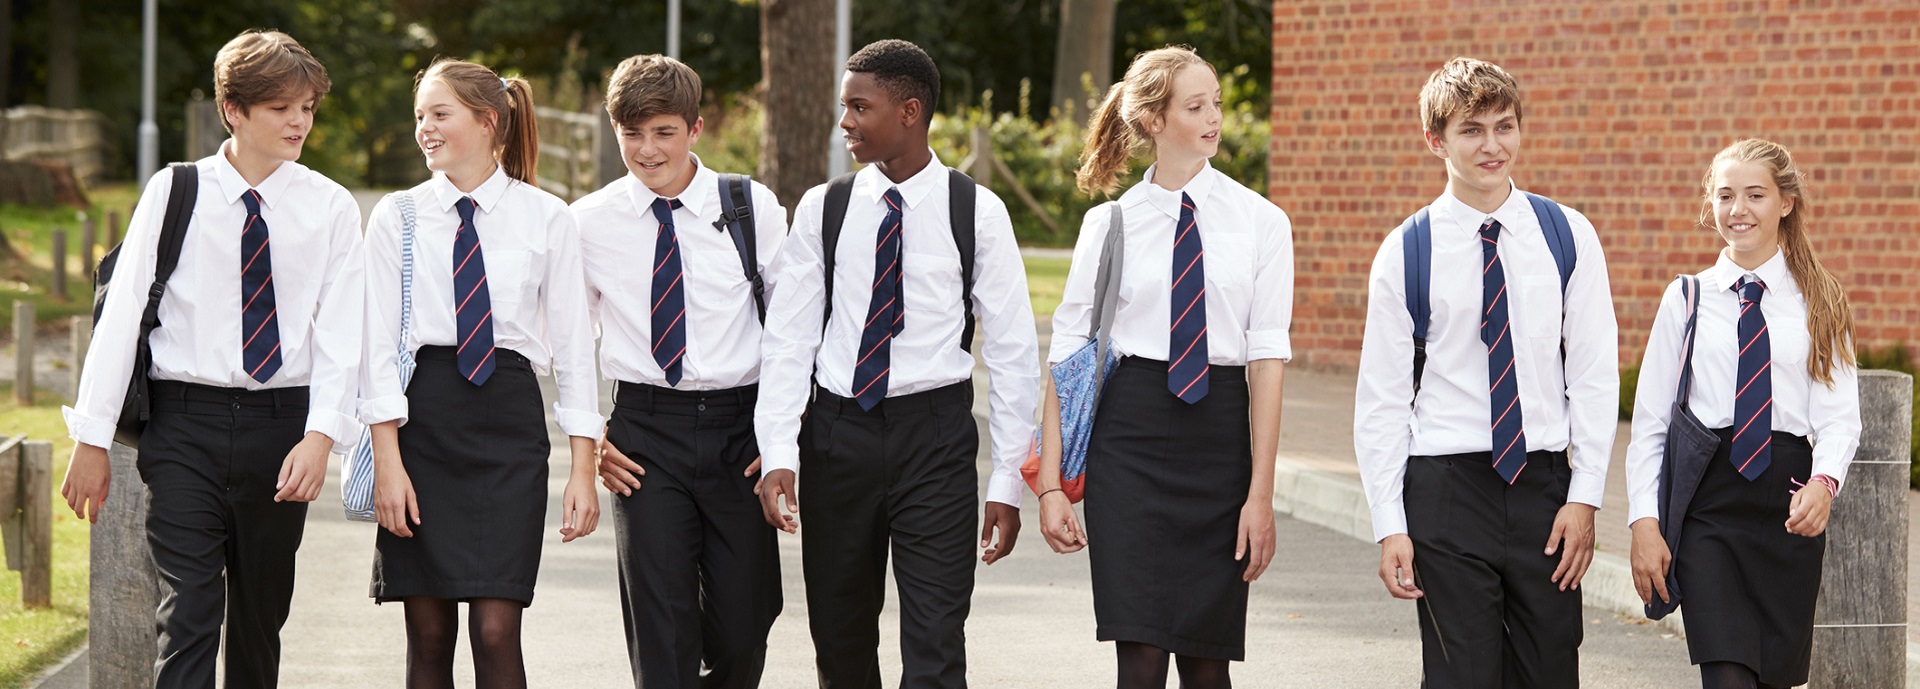 secondary school students in school uniform